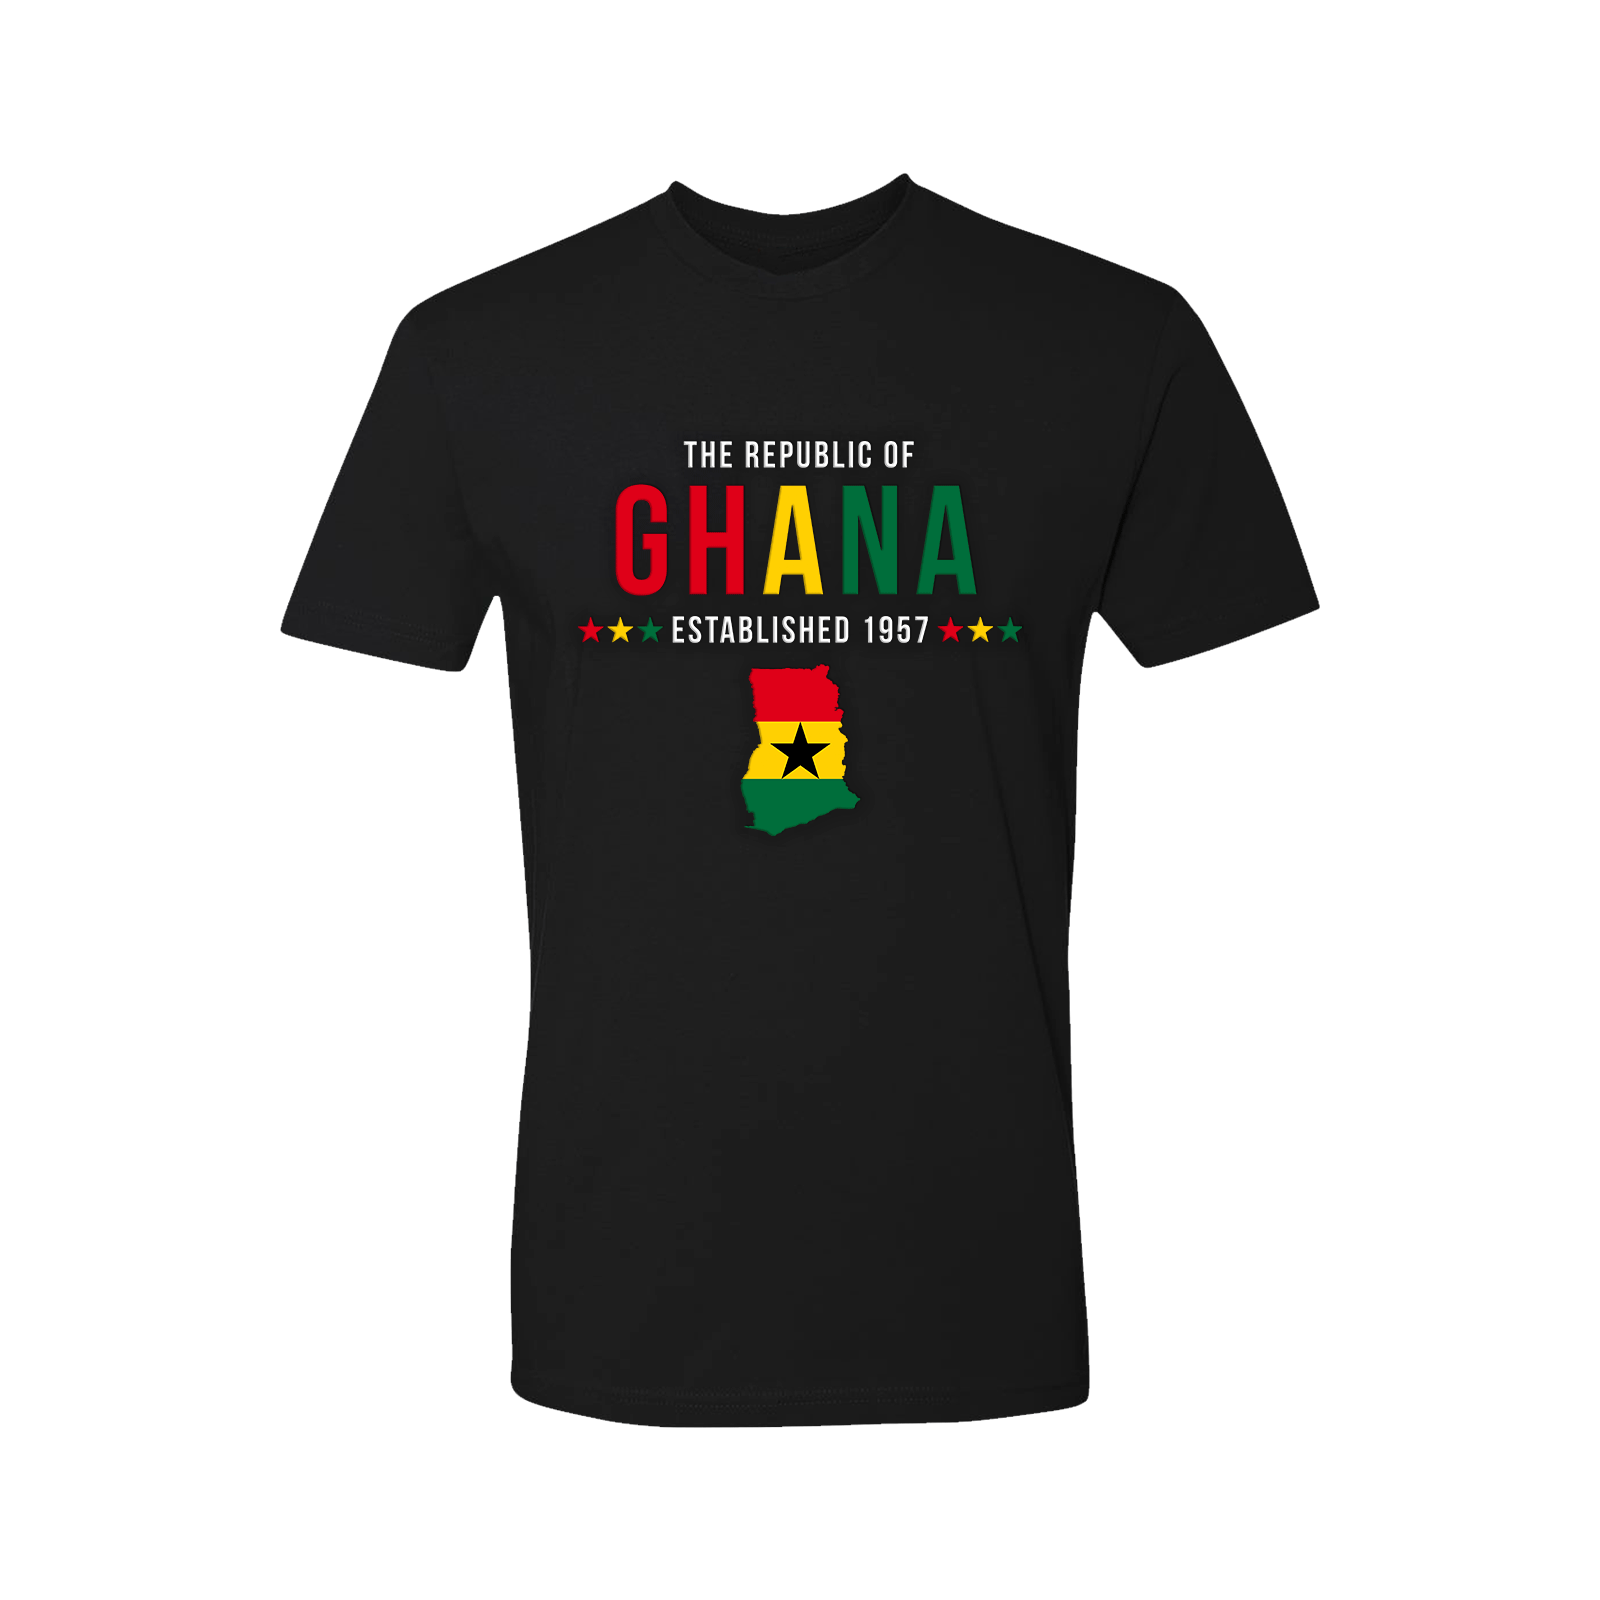 Ghana Short Sleeve Shirt - Adult